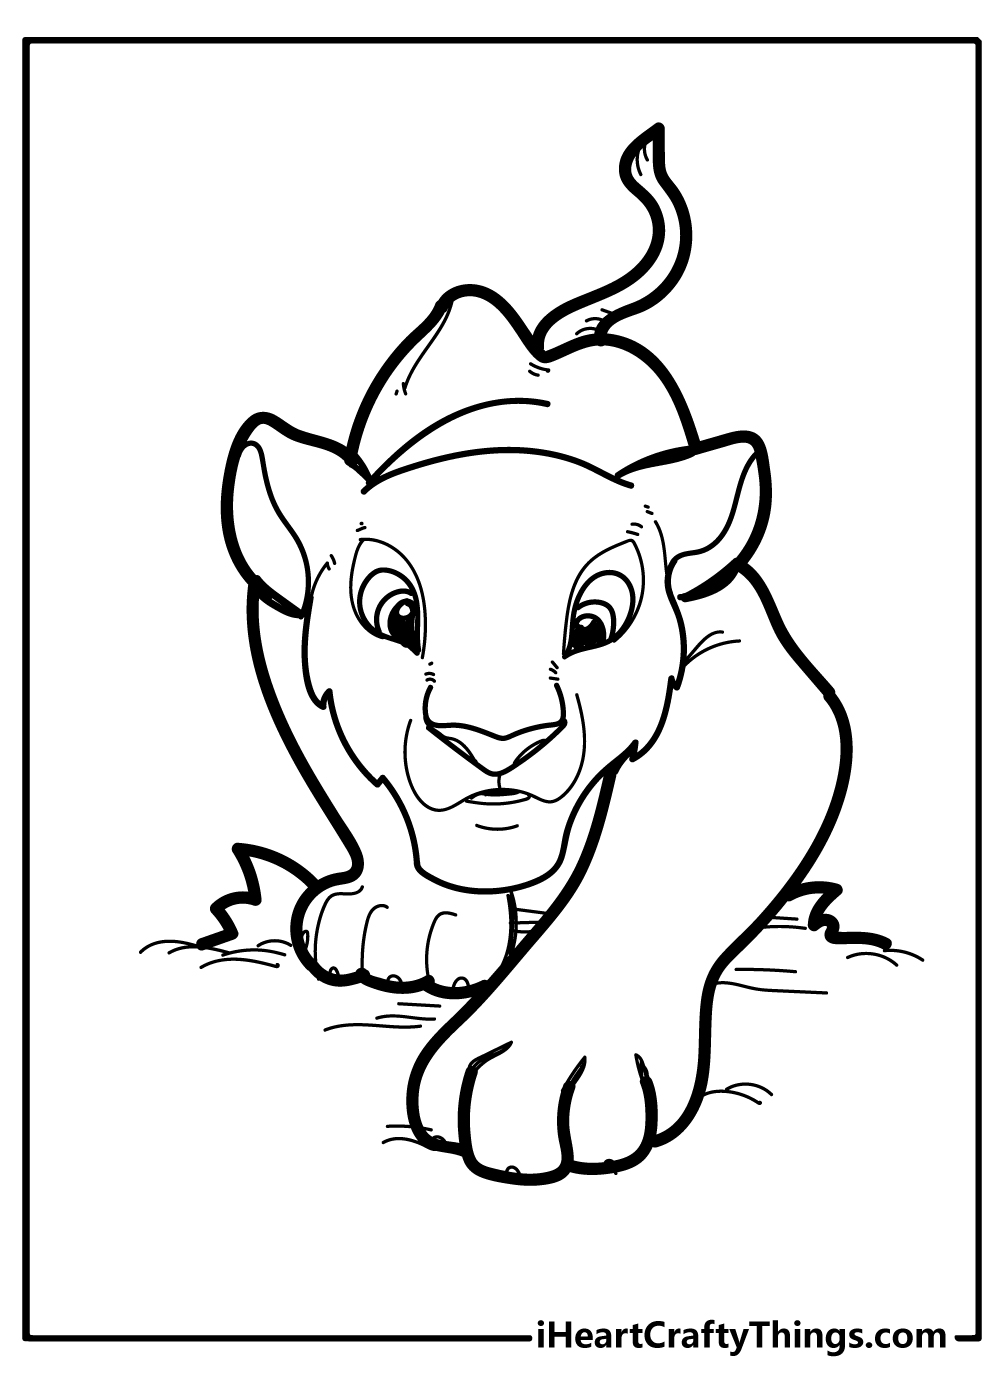 Lion Coloring Original Sheet for children free download